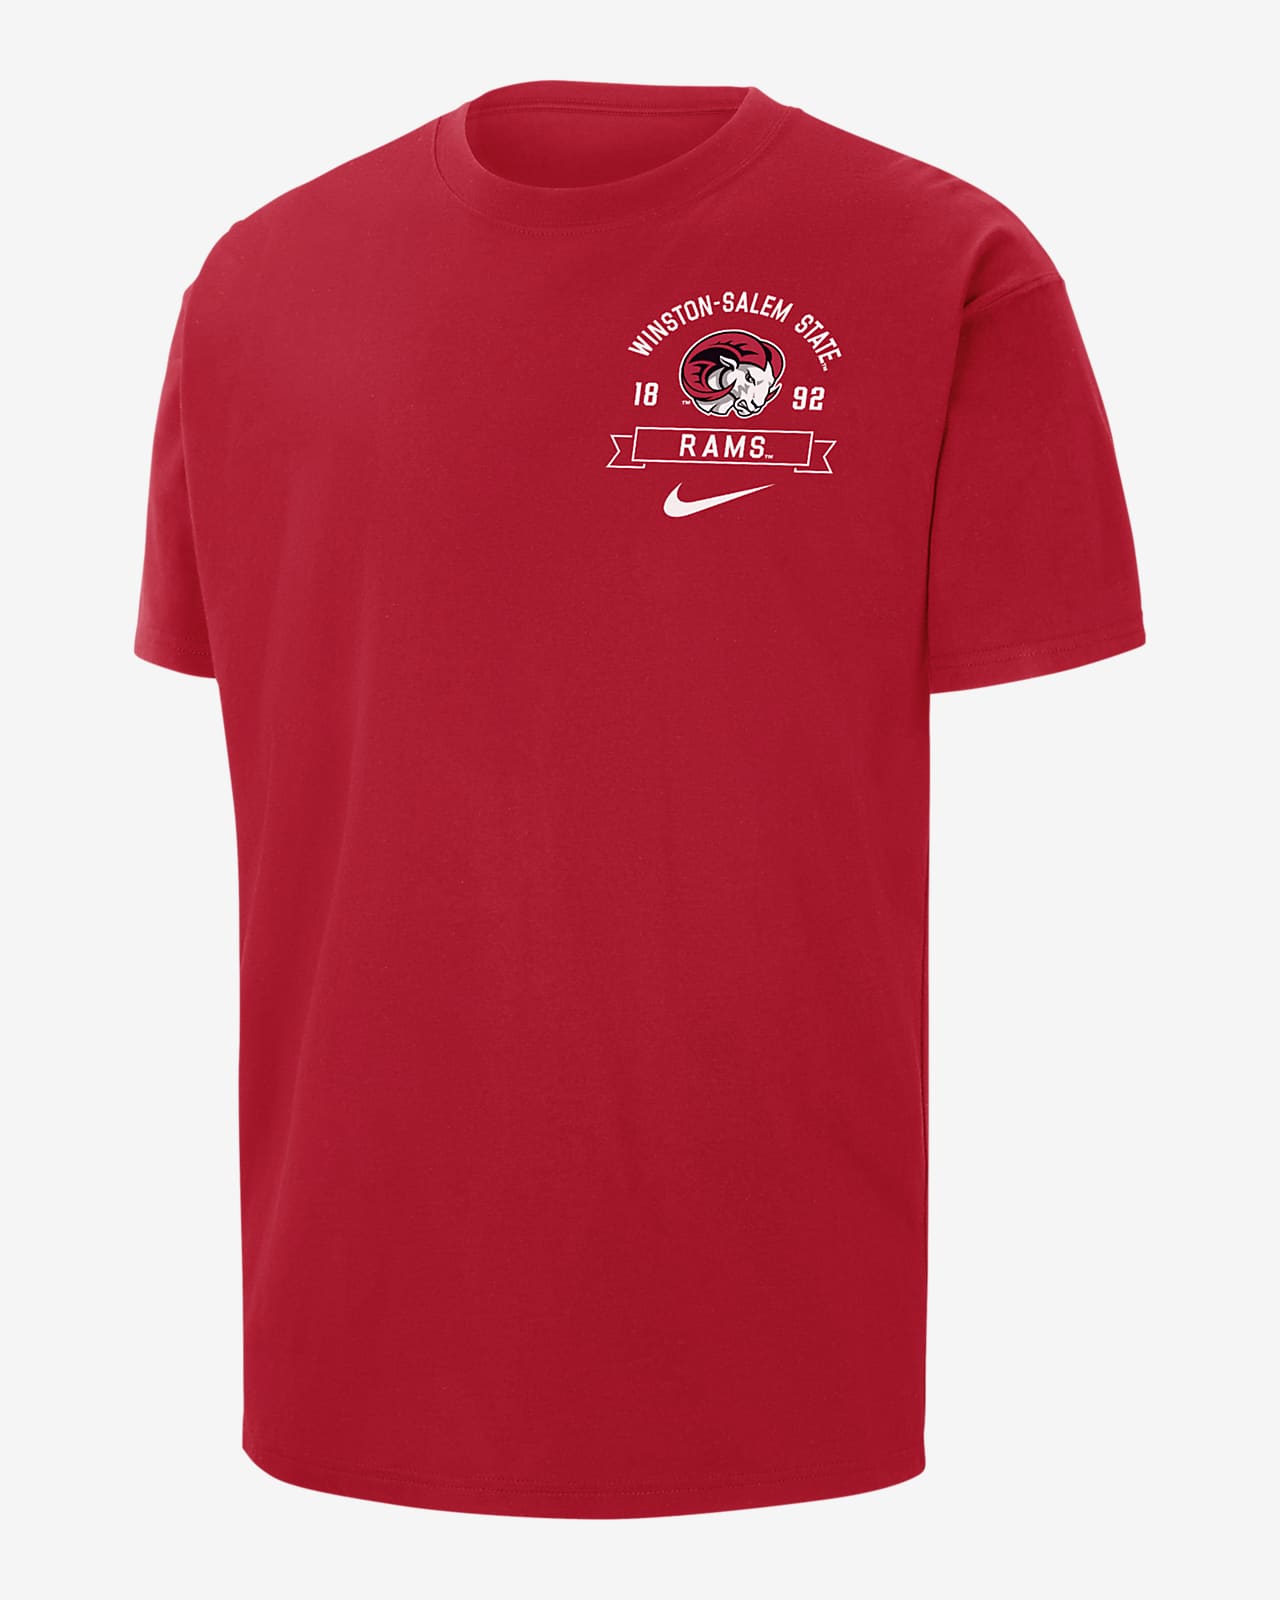 Winston-Salem Max90 Men's Nike College T-Shirt